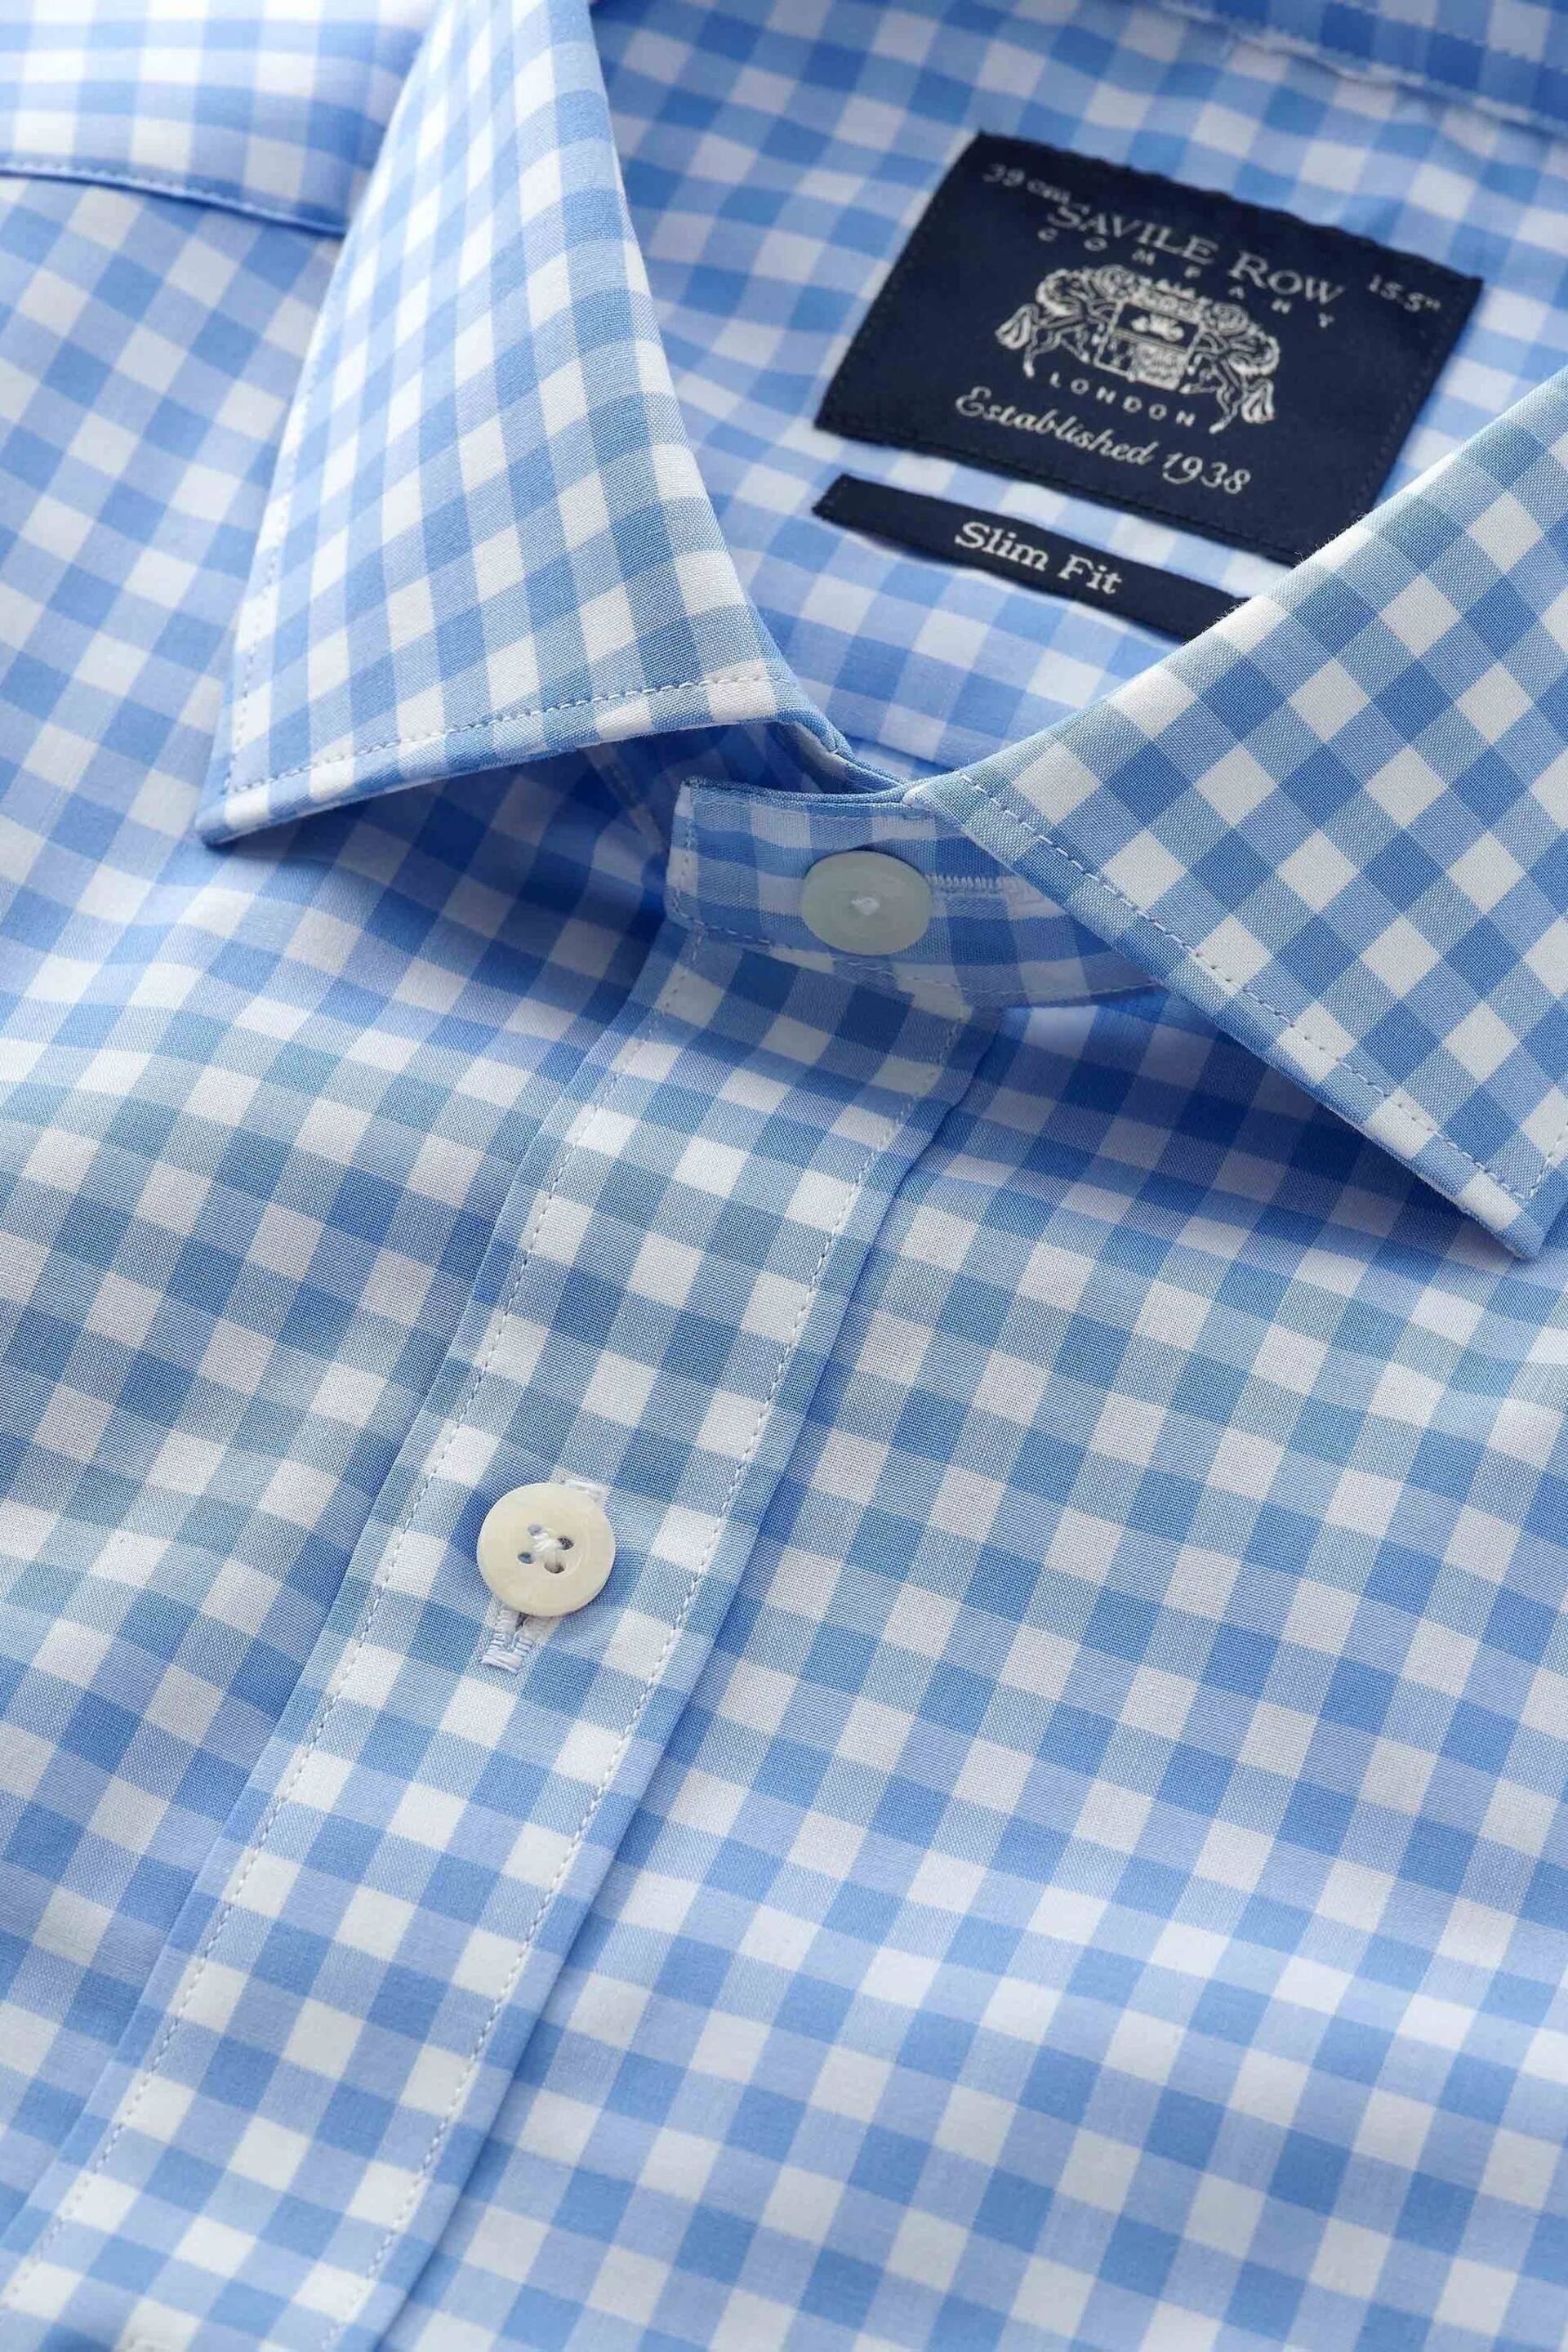 The Savile Row Company Slim Fit Blue Single Cuff Savile Row Check Shirt - Image 5 of 6